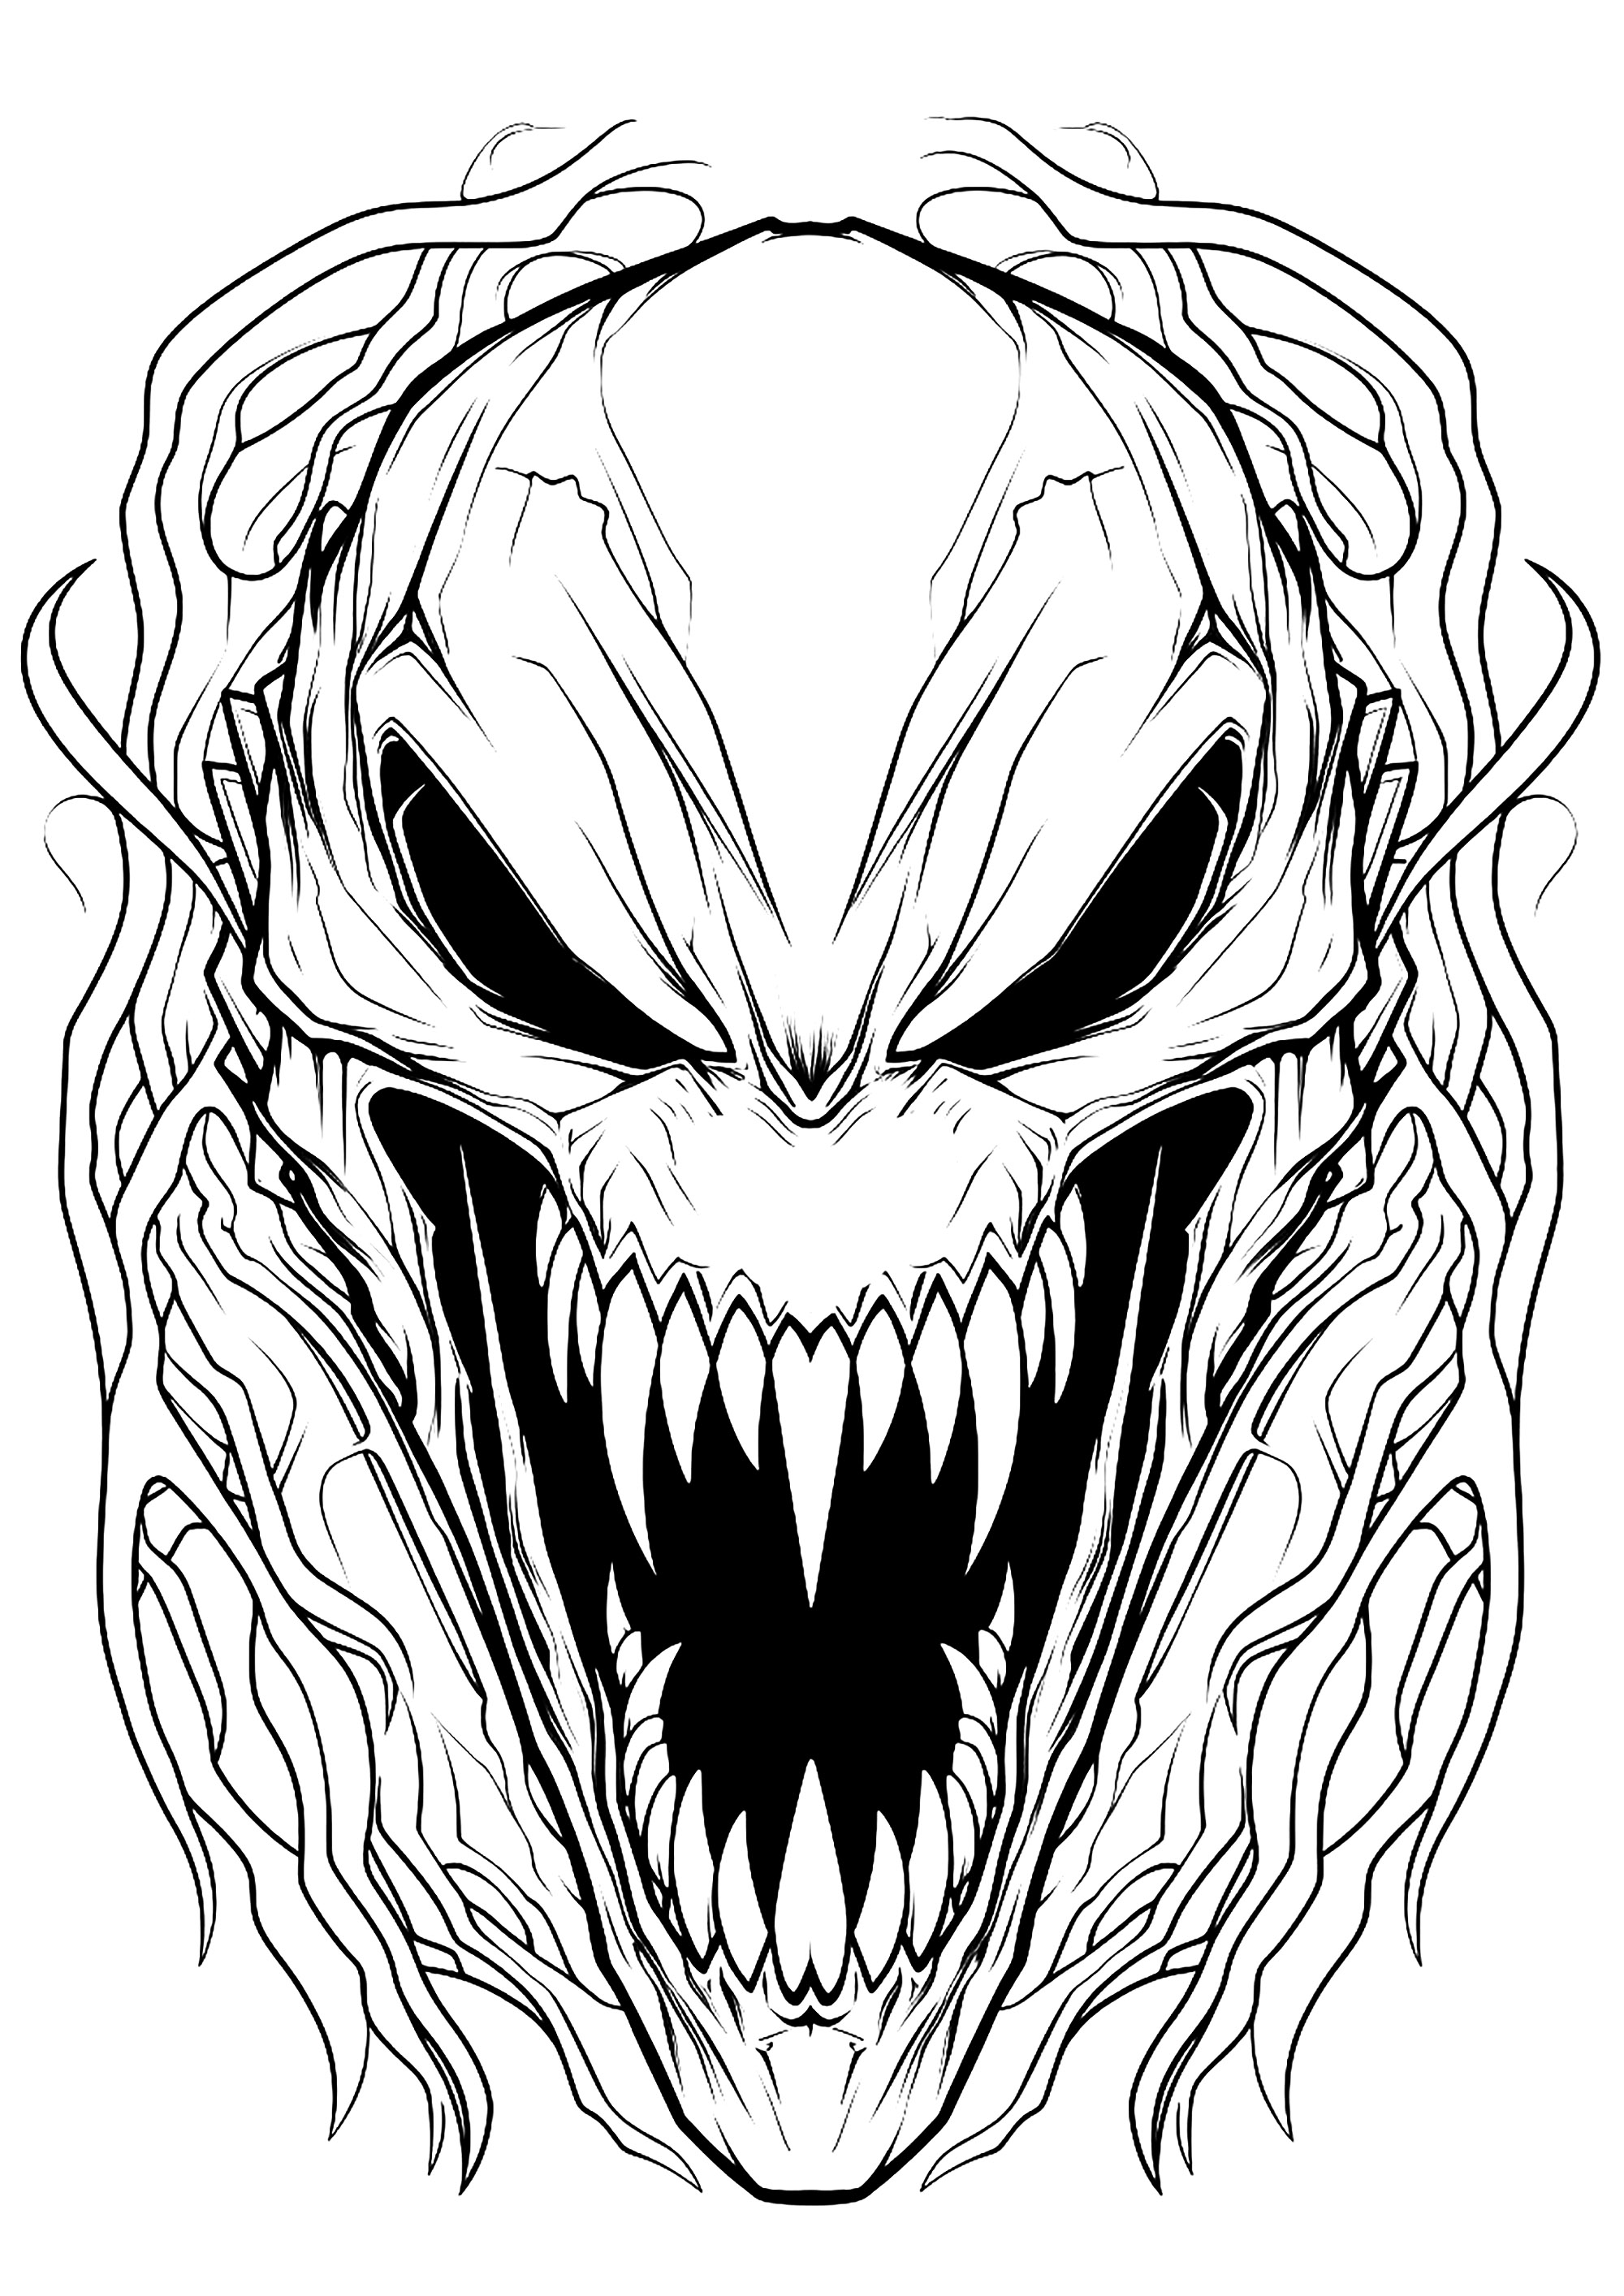 Venom's face. Scary coloring